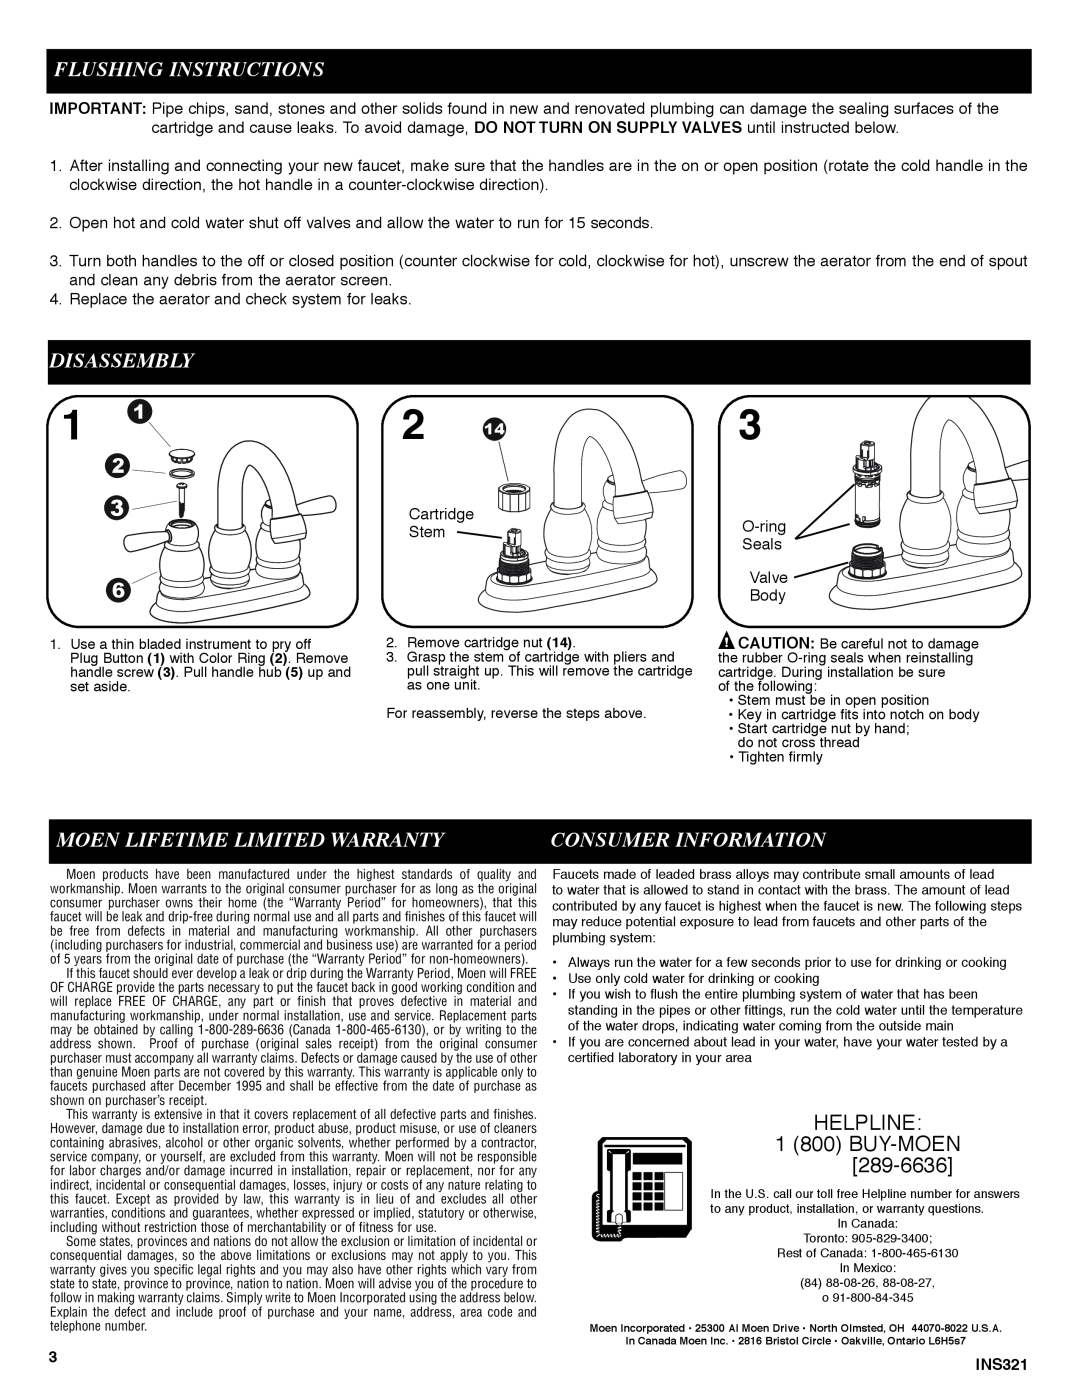 Moen 84781 manual Flushing Instructions, Disassembly, Moen Lifetime Limited Warranty, Consumer Information, INS321 